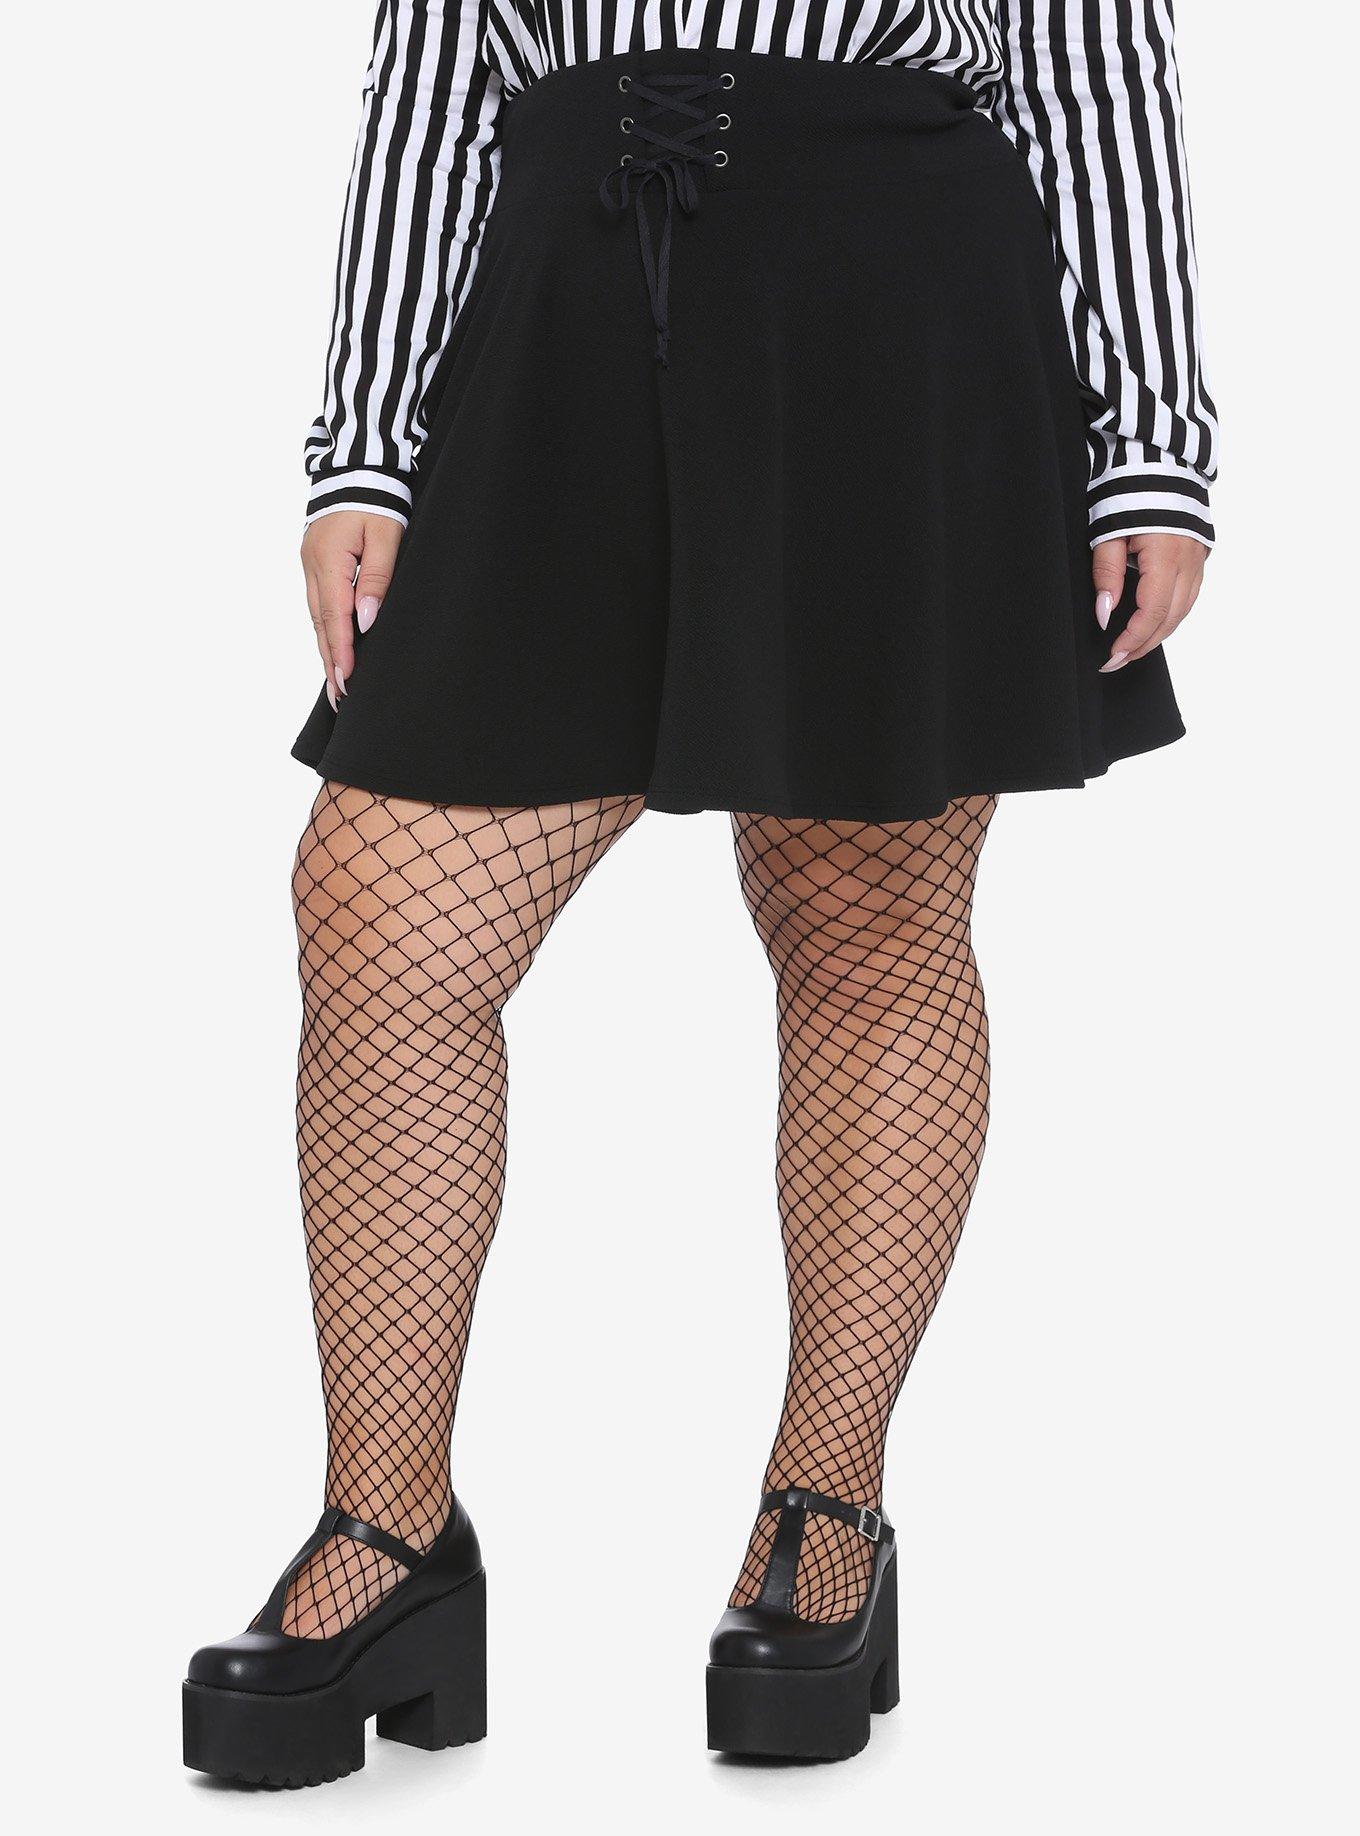 Lace-Up Skater Skirt Plus Size, BLACK, hi-res